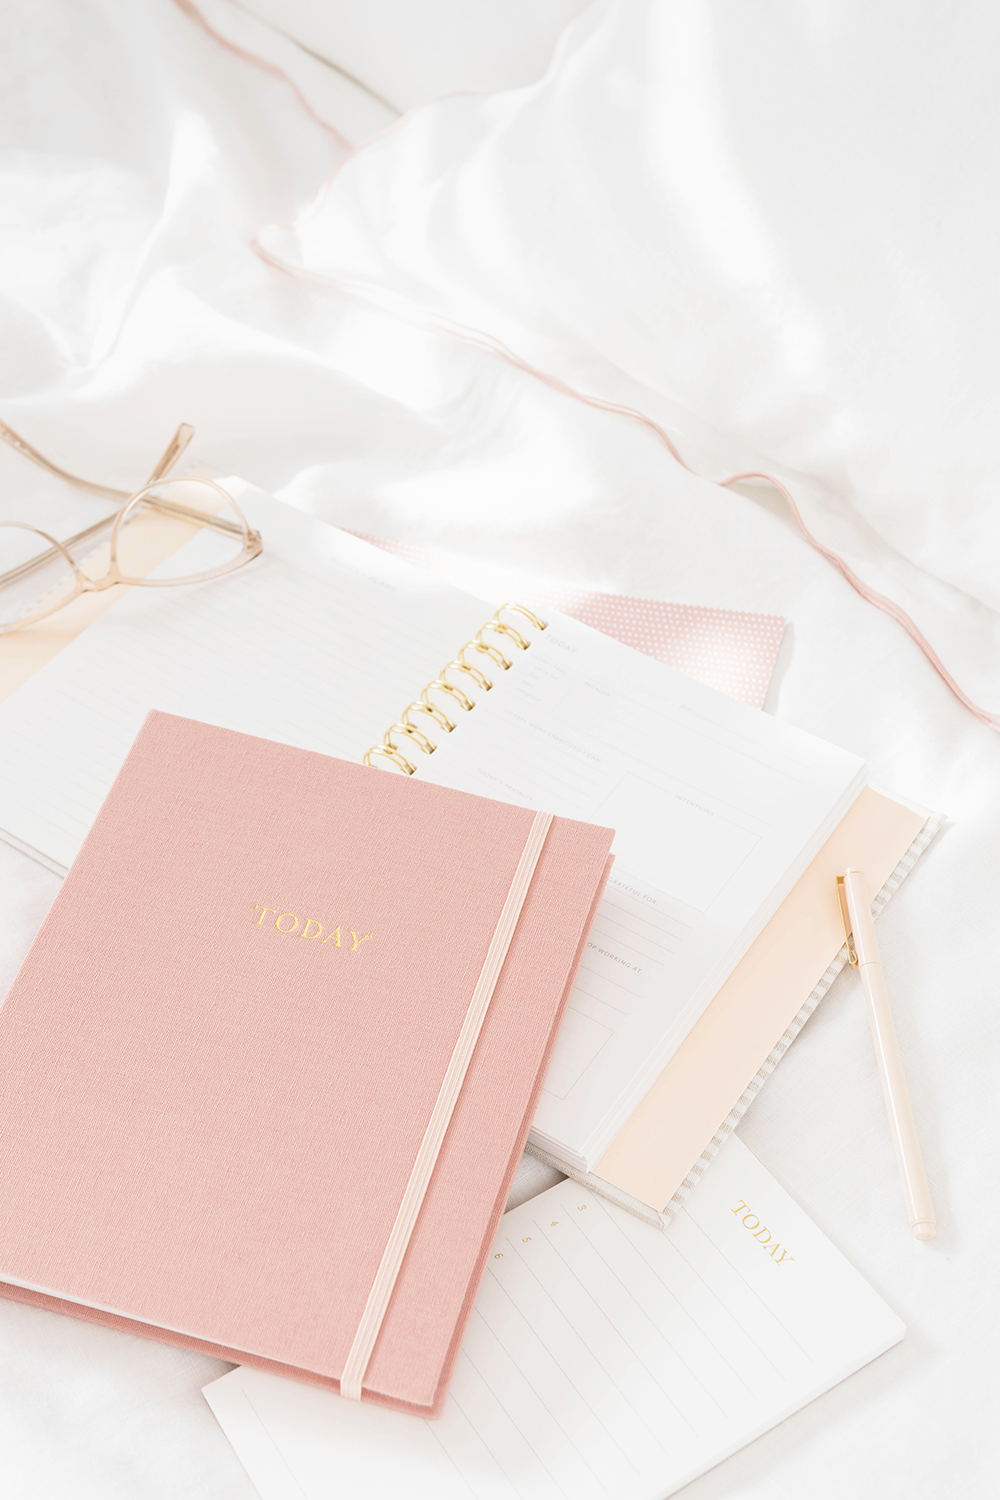 Small Photo Album Pink - Sugar Paper Essentials